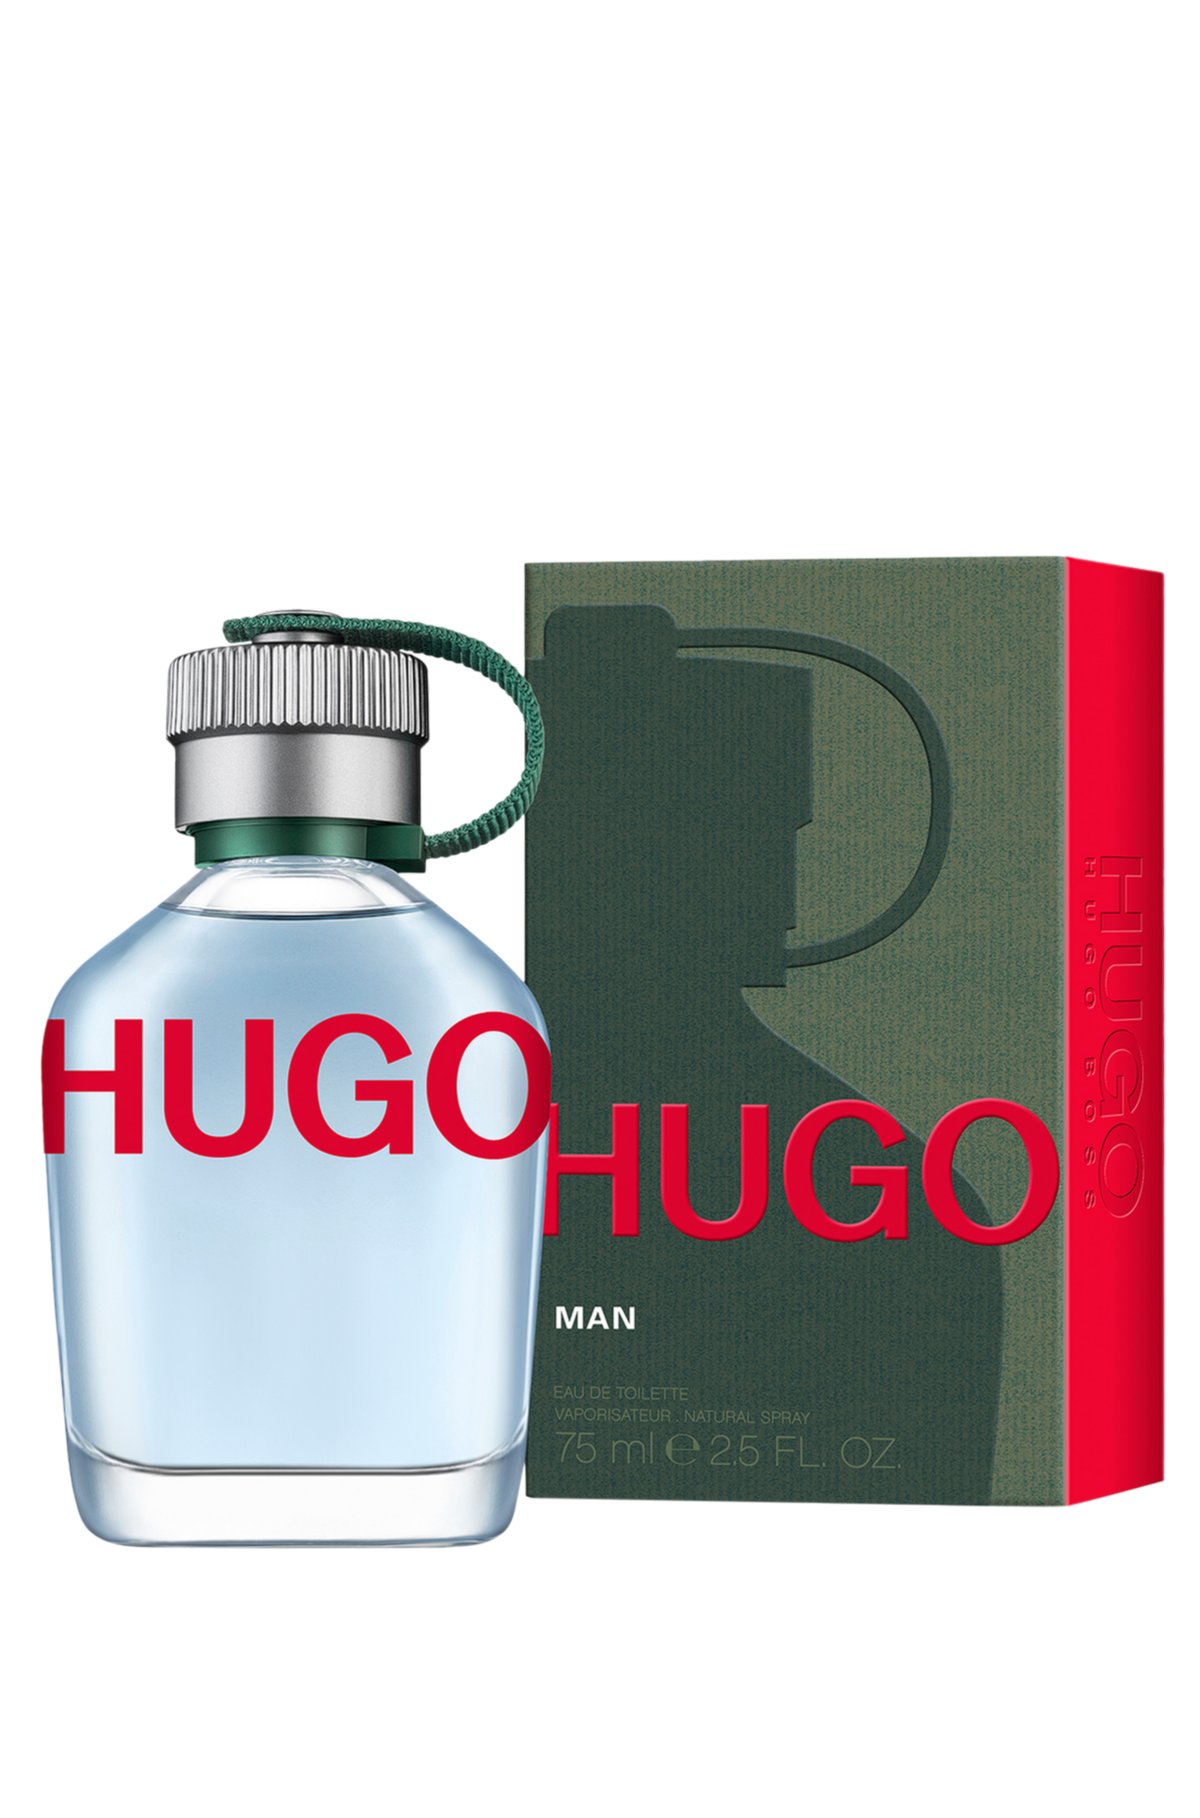 Historicus transactie Verrijken HUGO - HUGO Man eau de toilette 75ml